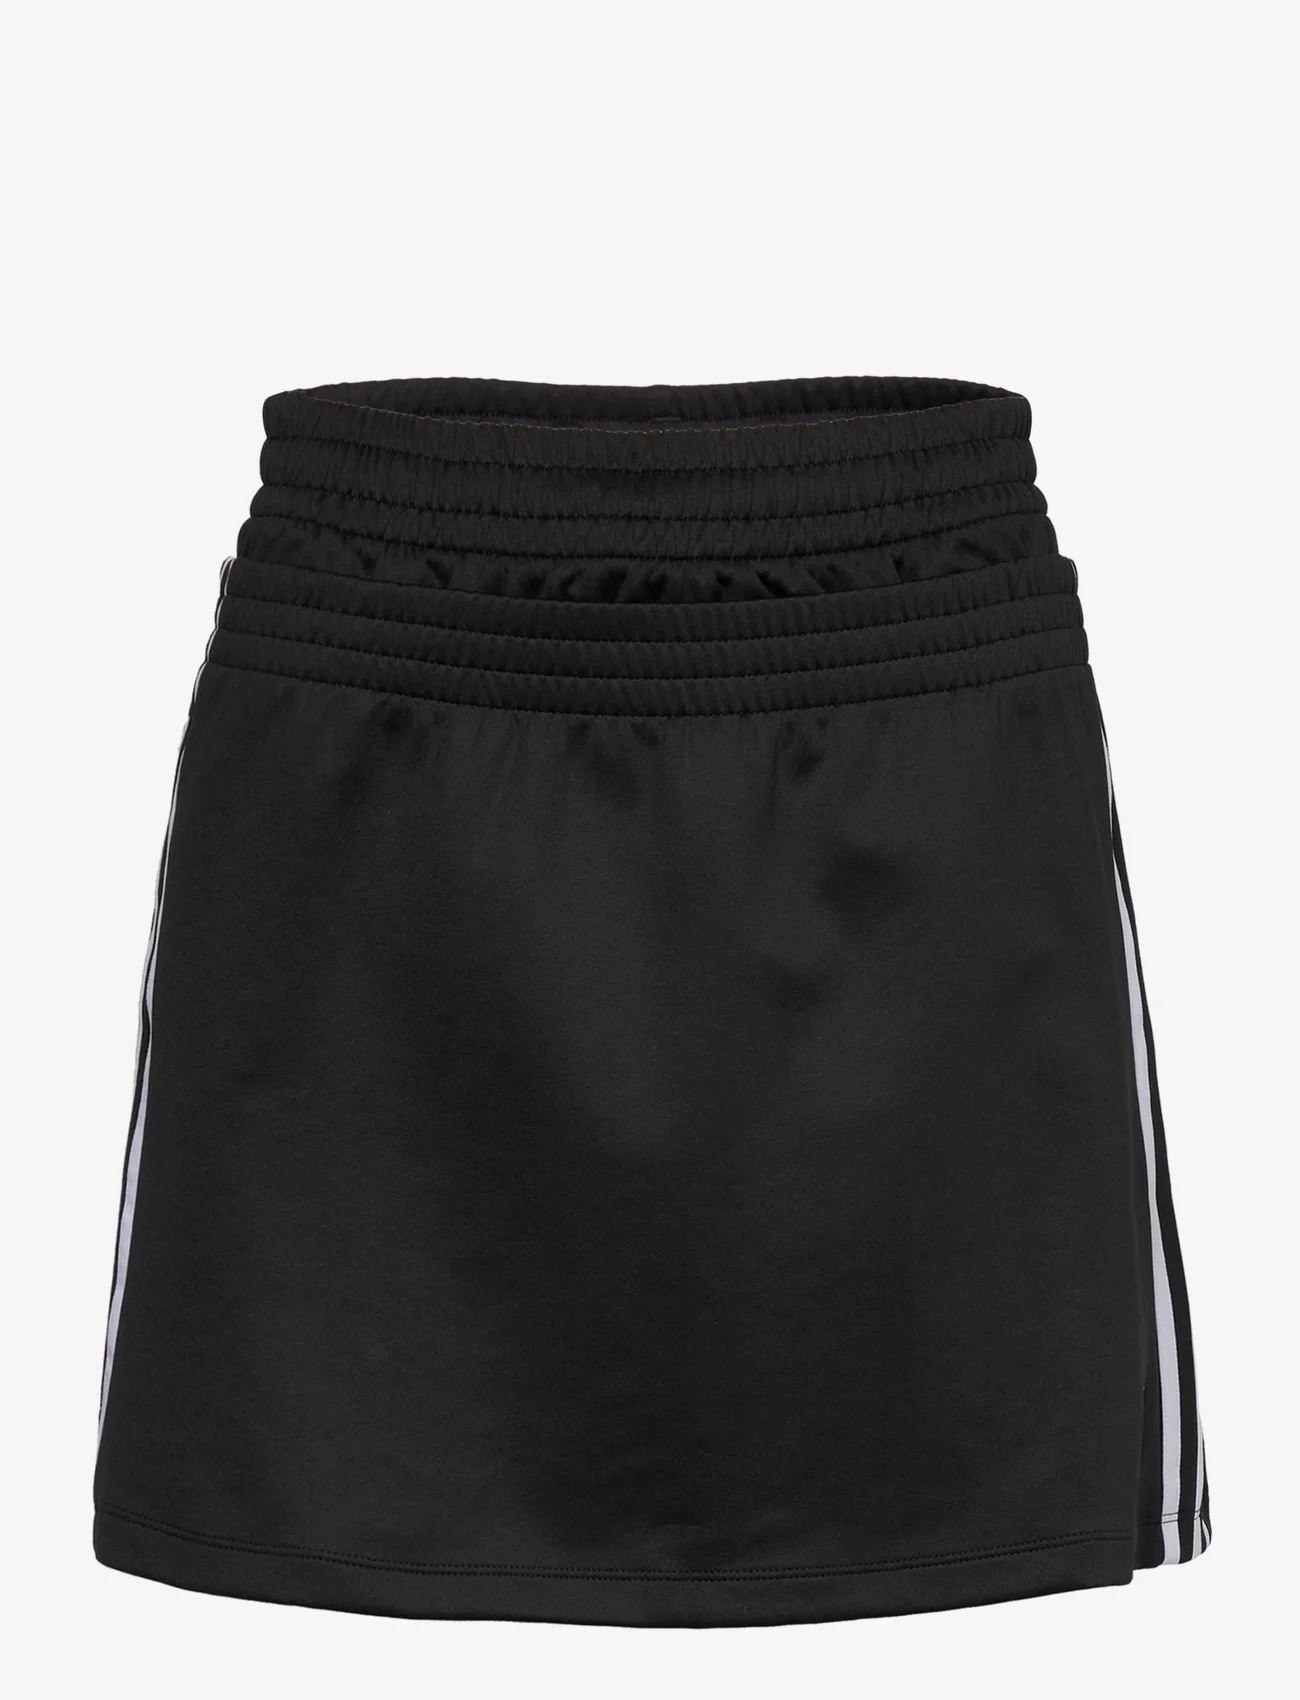 adidas Originals - Always Original Skirt - spódnice - black - 0